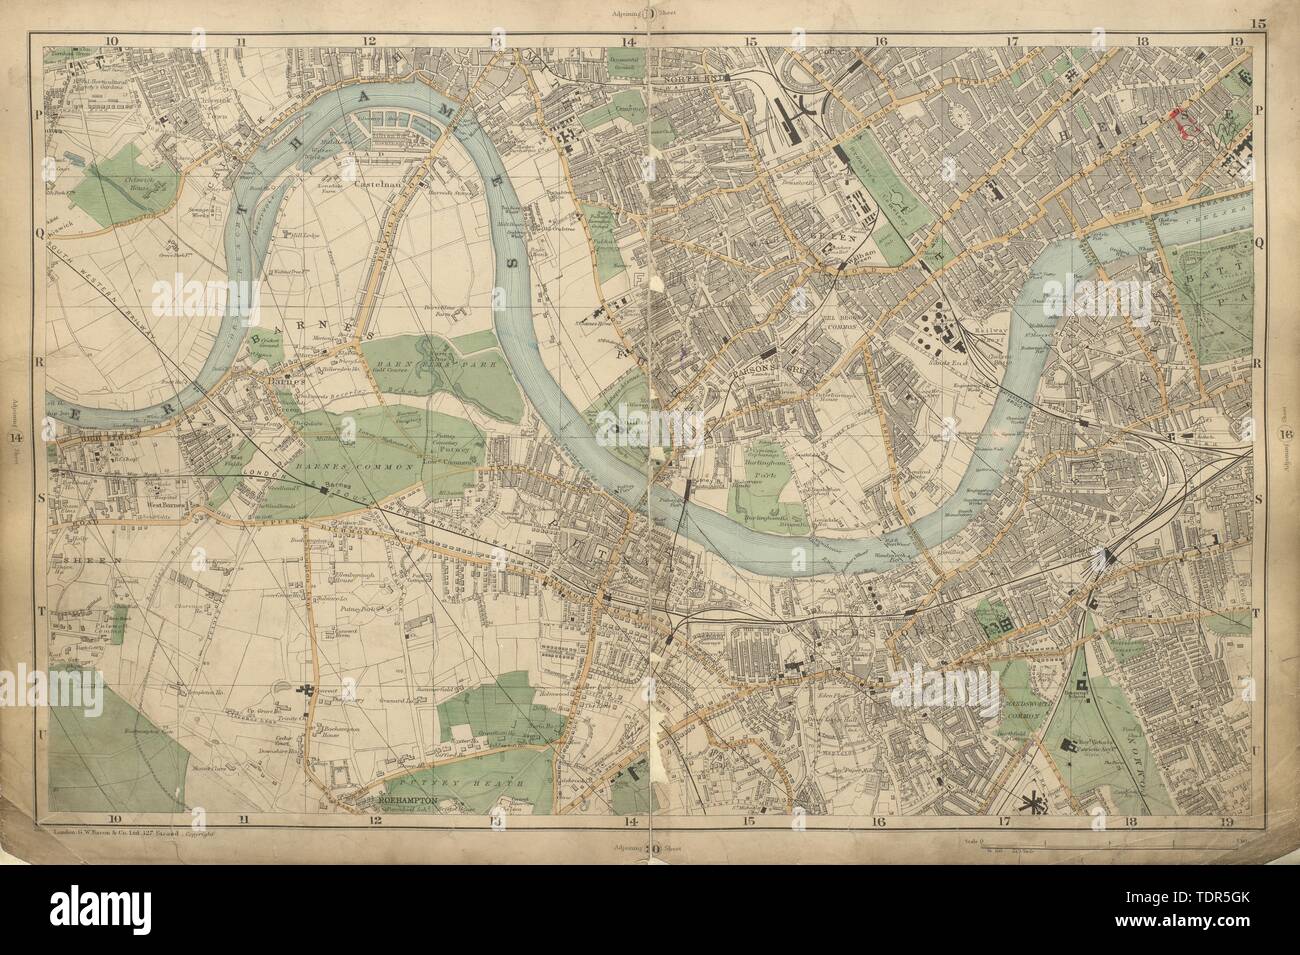 LONDON Chiswick Barnes Chelsea Fulham Putney Wandsworth Clapham BACON 1900 mappa Foto Stock